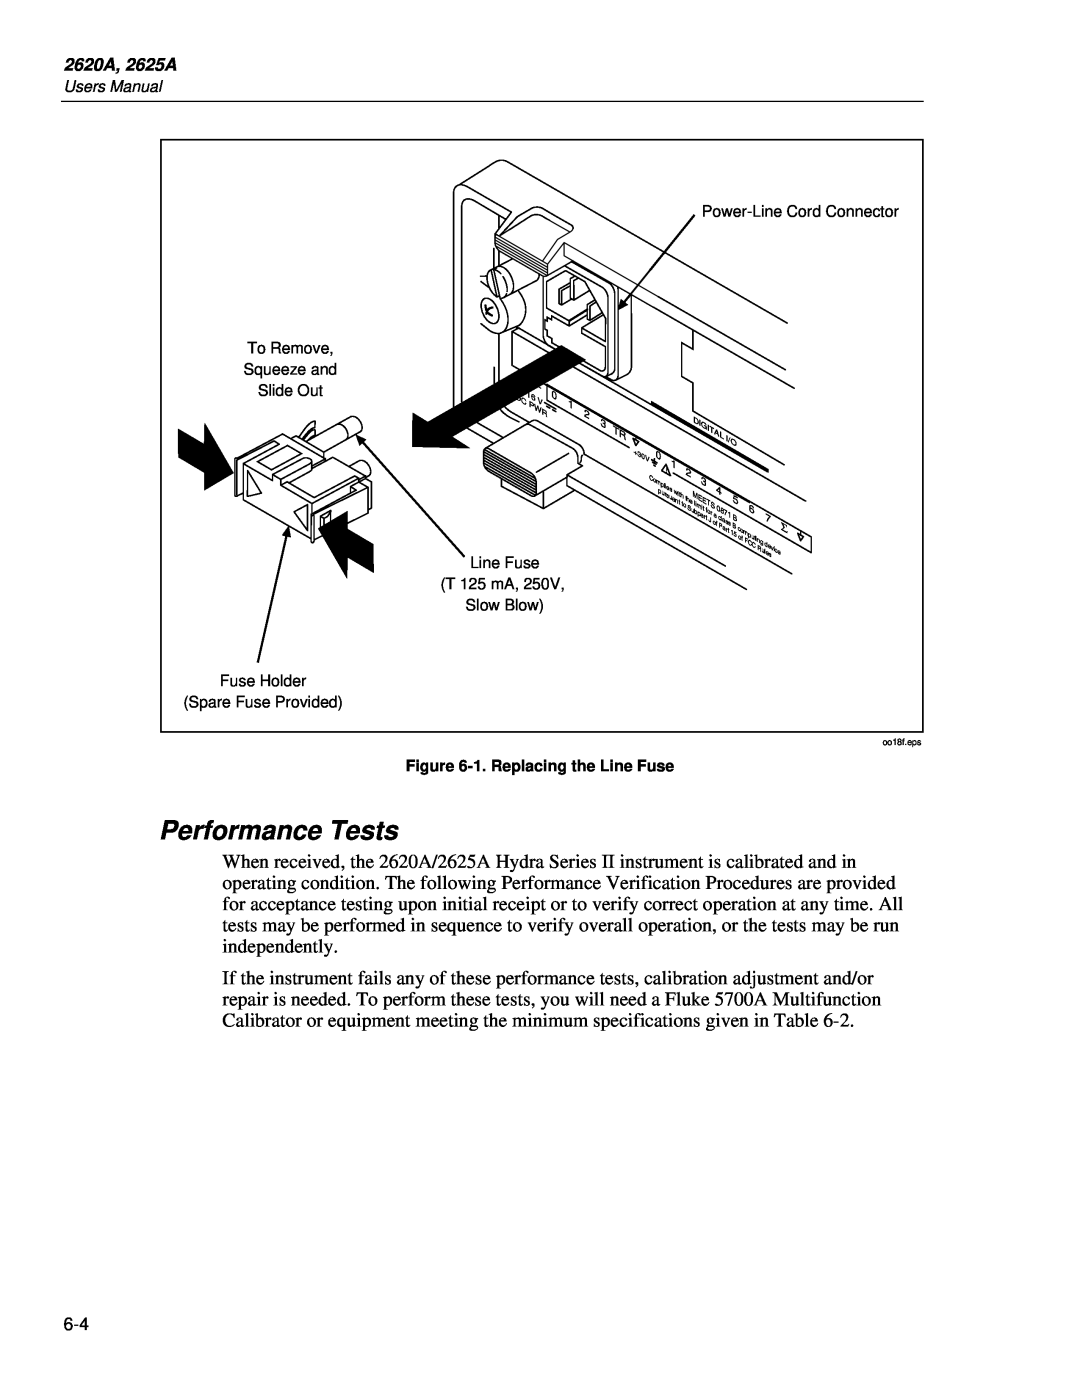 Fluke 2625A, 2620A user manual Performance Tests 